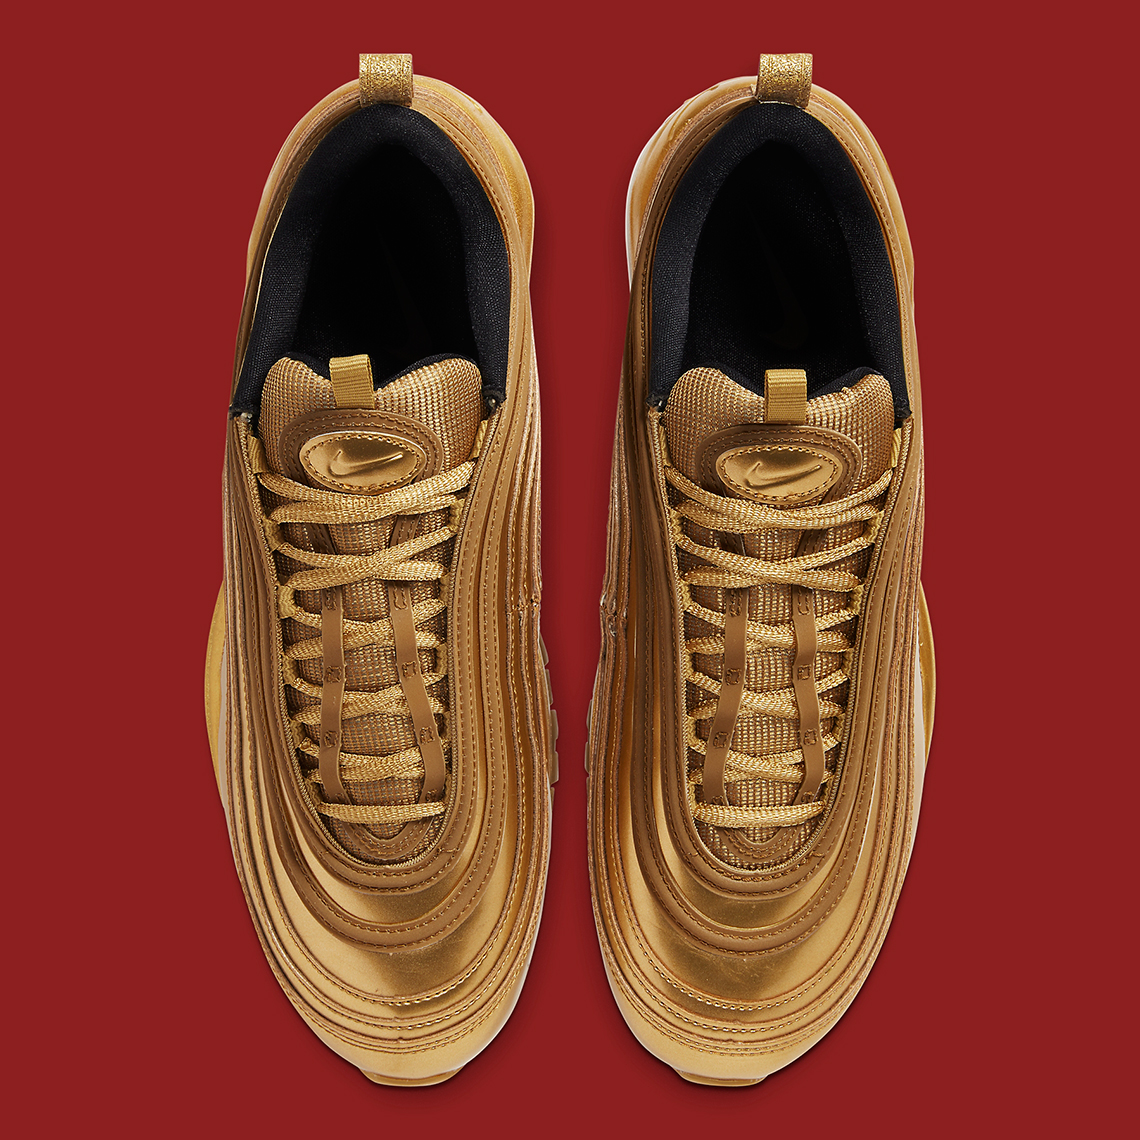 Nike Air Max 97 Gold Ct4556 700 3